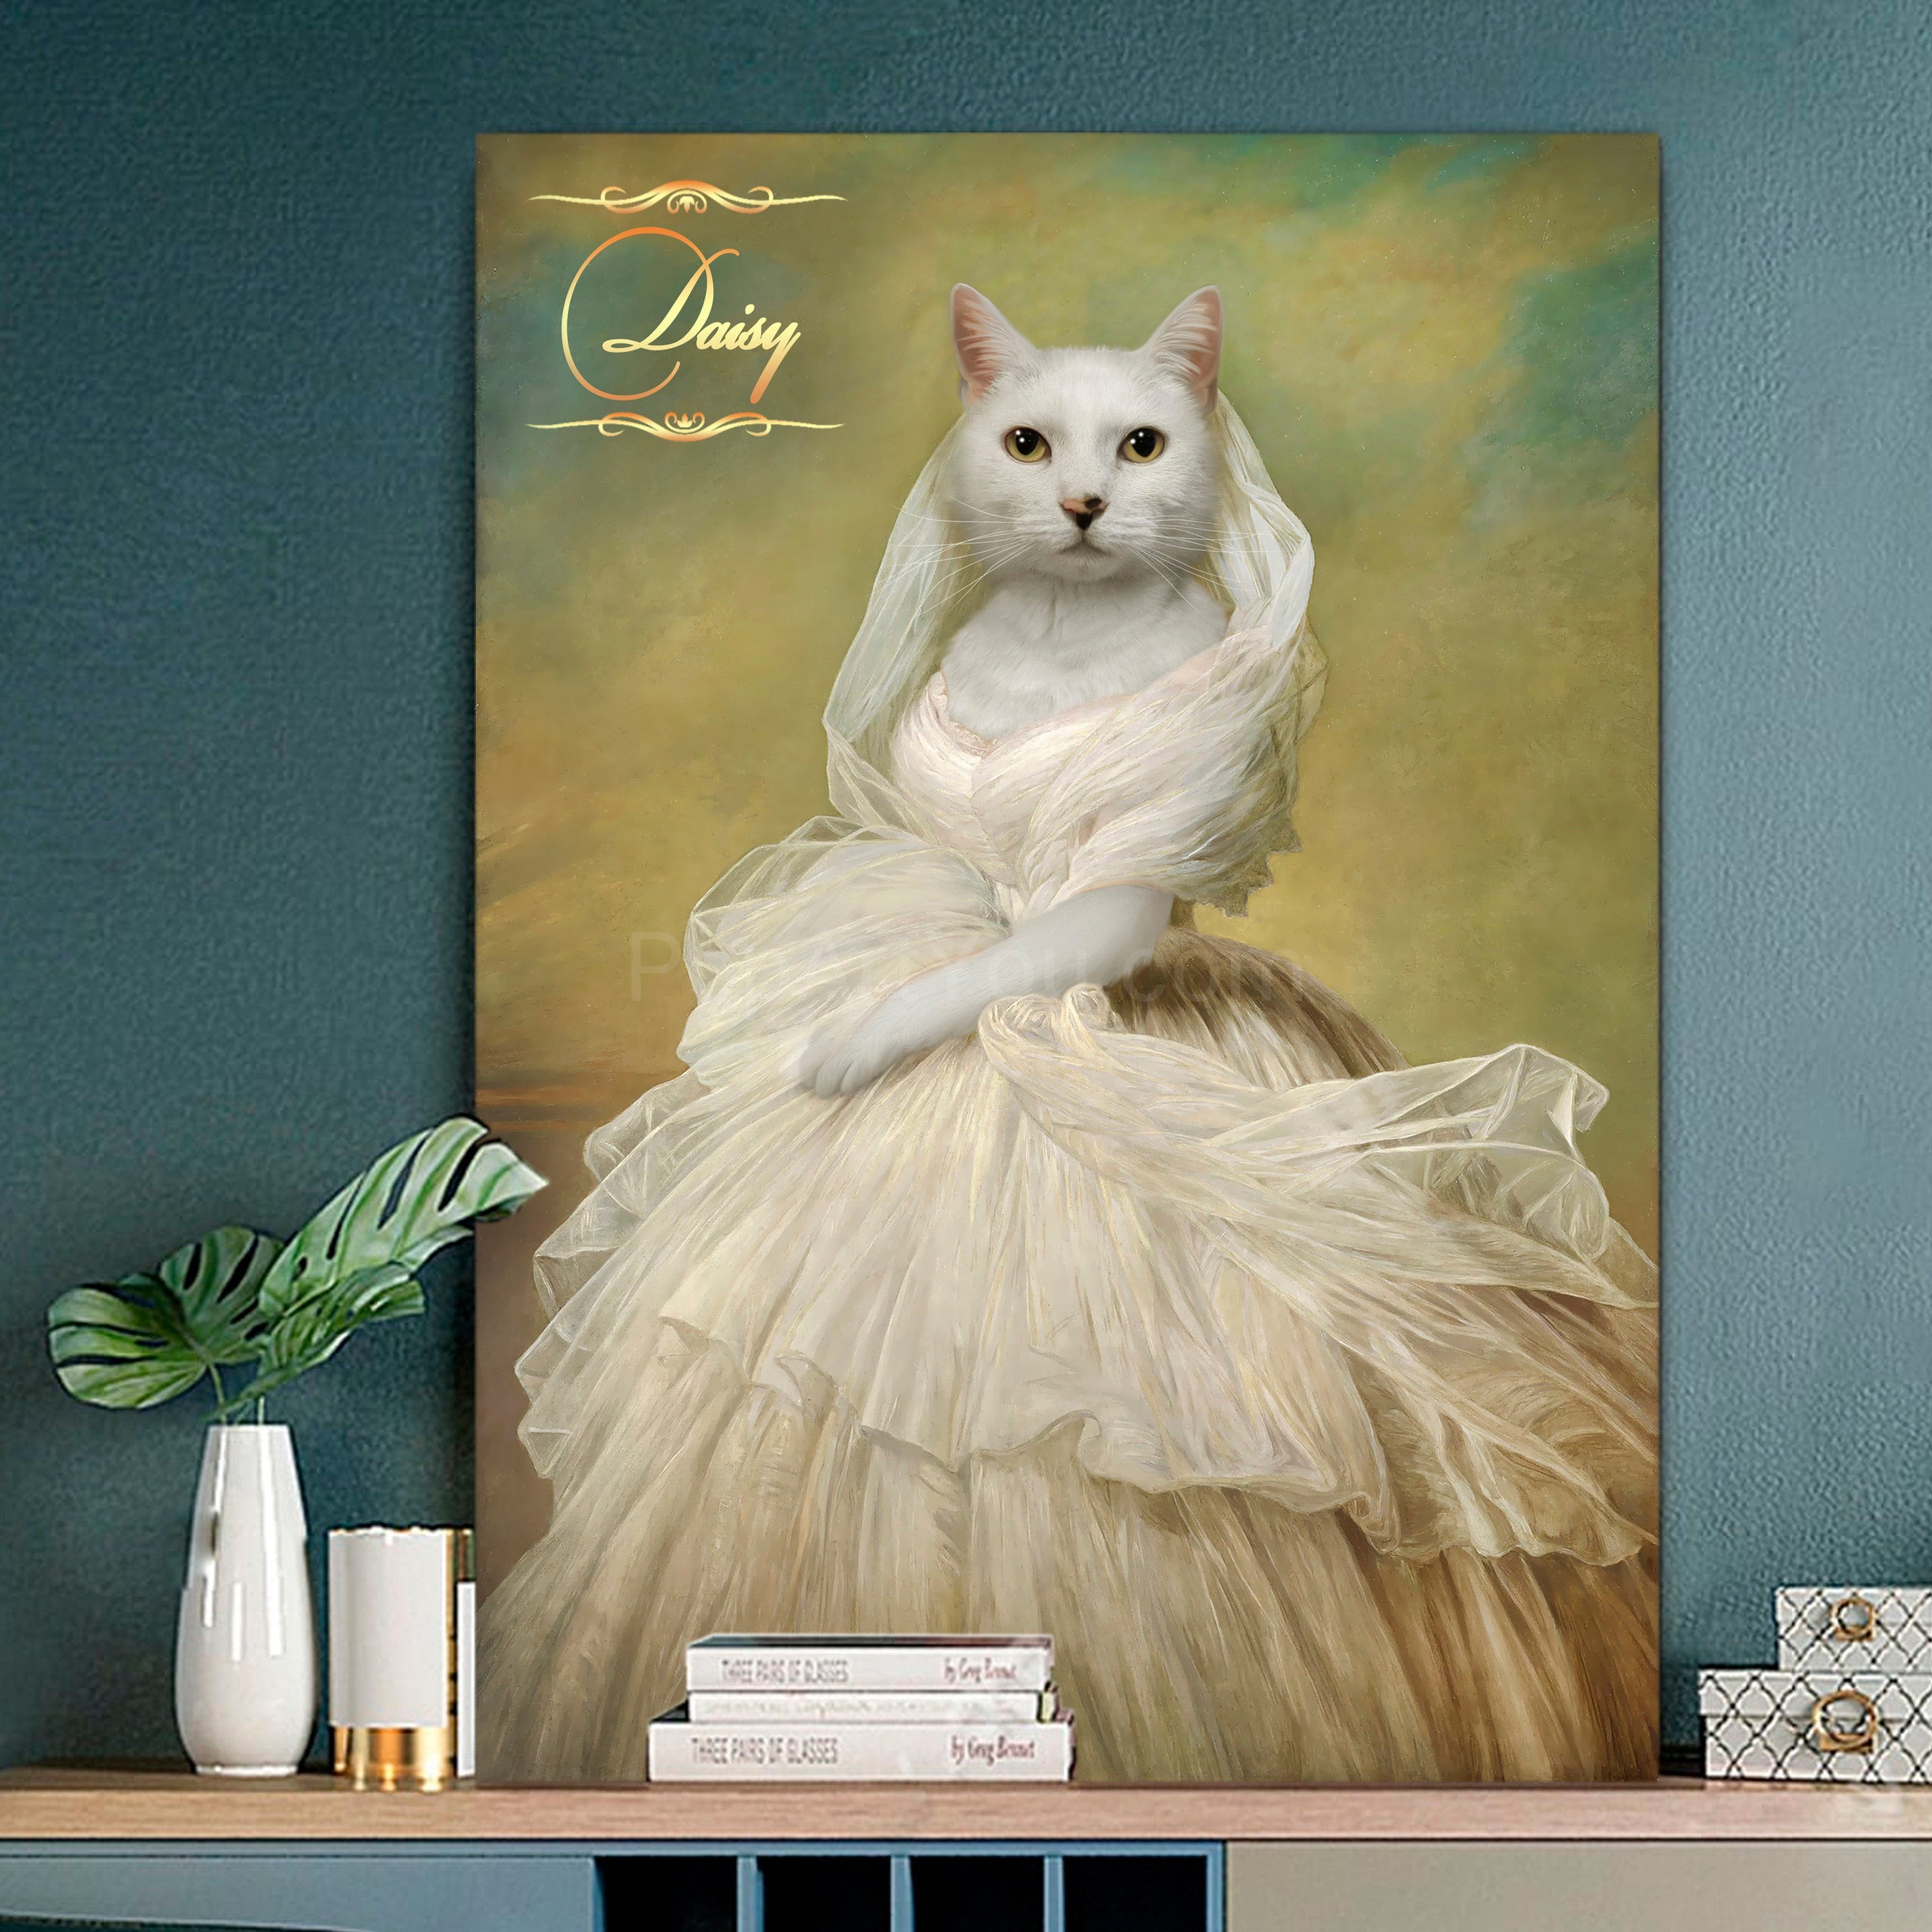 The White Princess - custom cat canvas